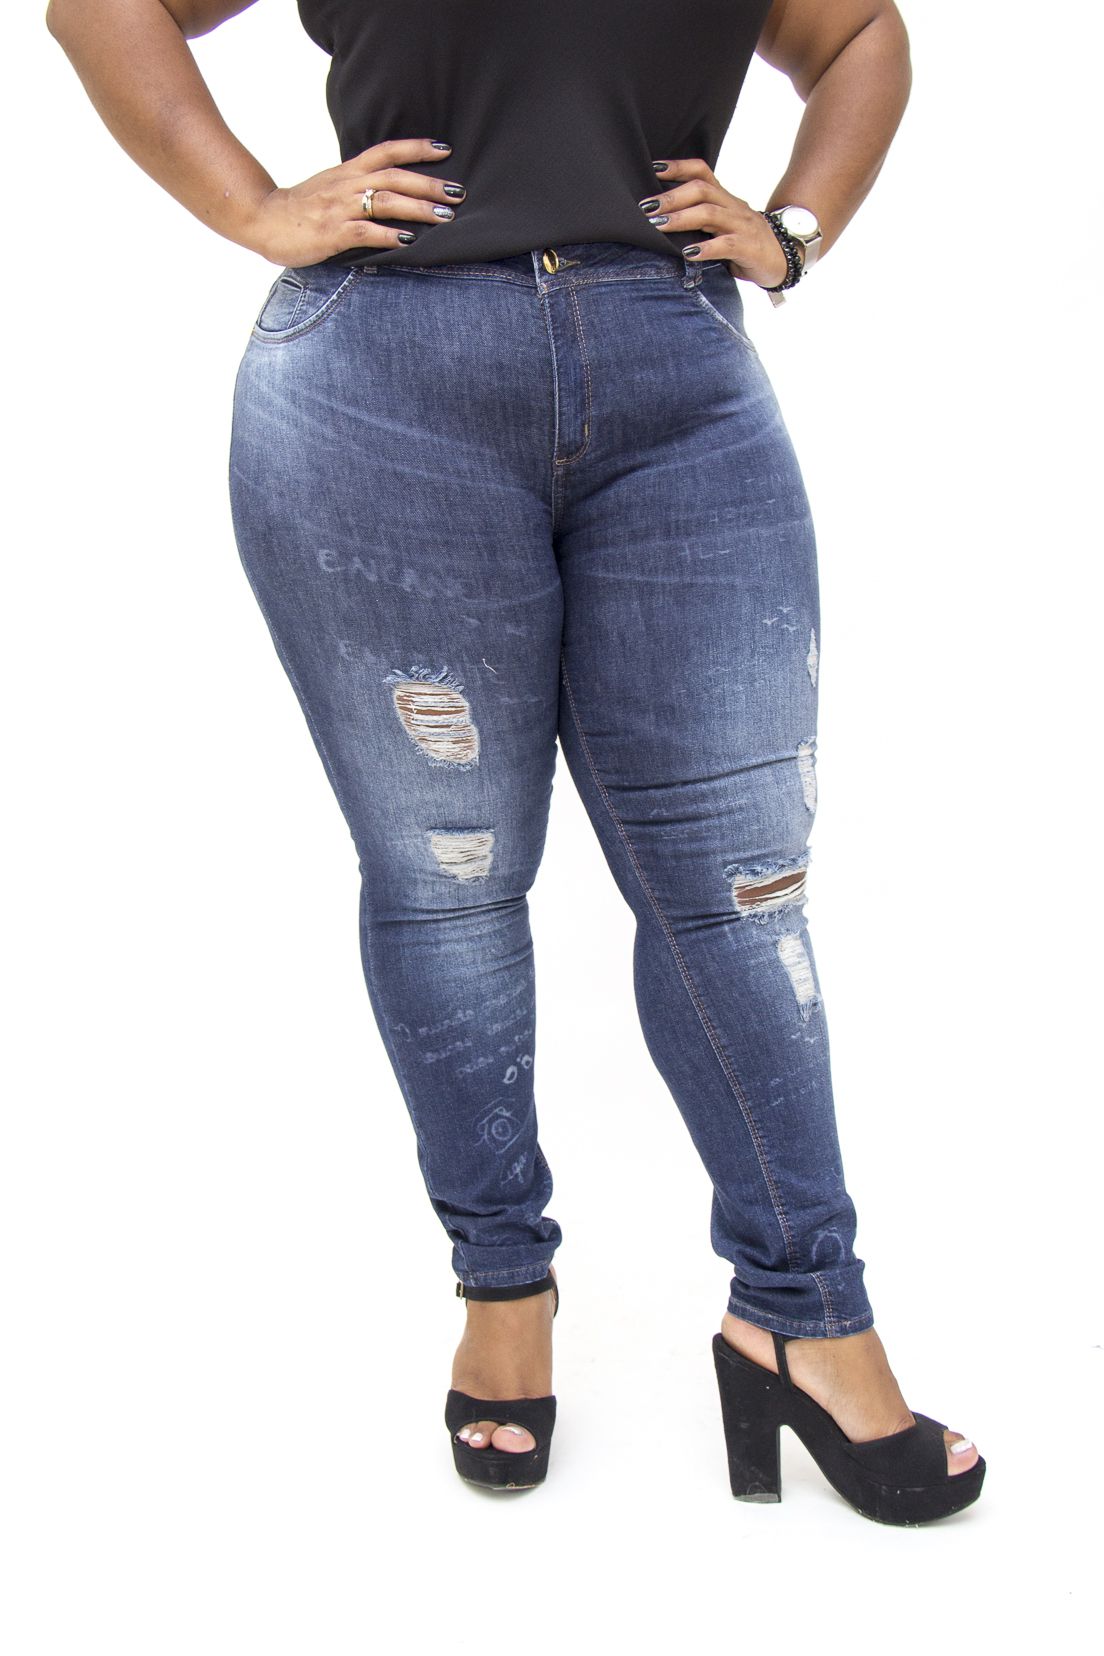 Calça Jeans Plus Size Feminina Rasgadinha Darlook Hot Pants - Ane Jeans -  11 Anos